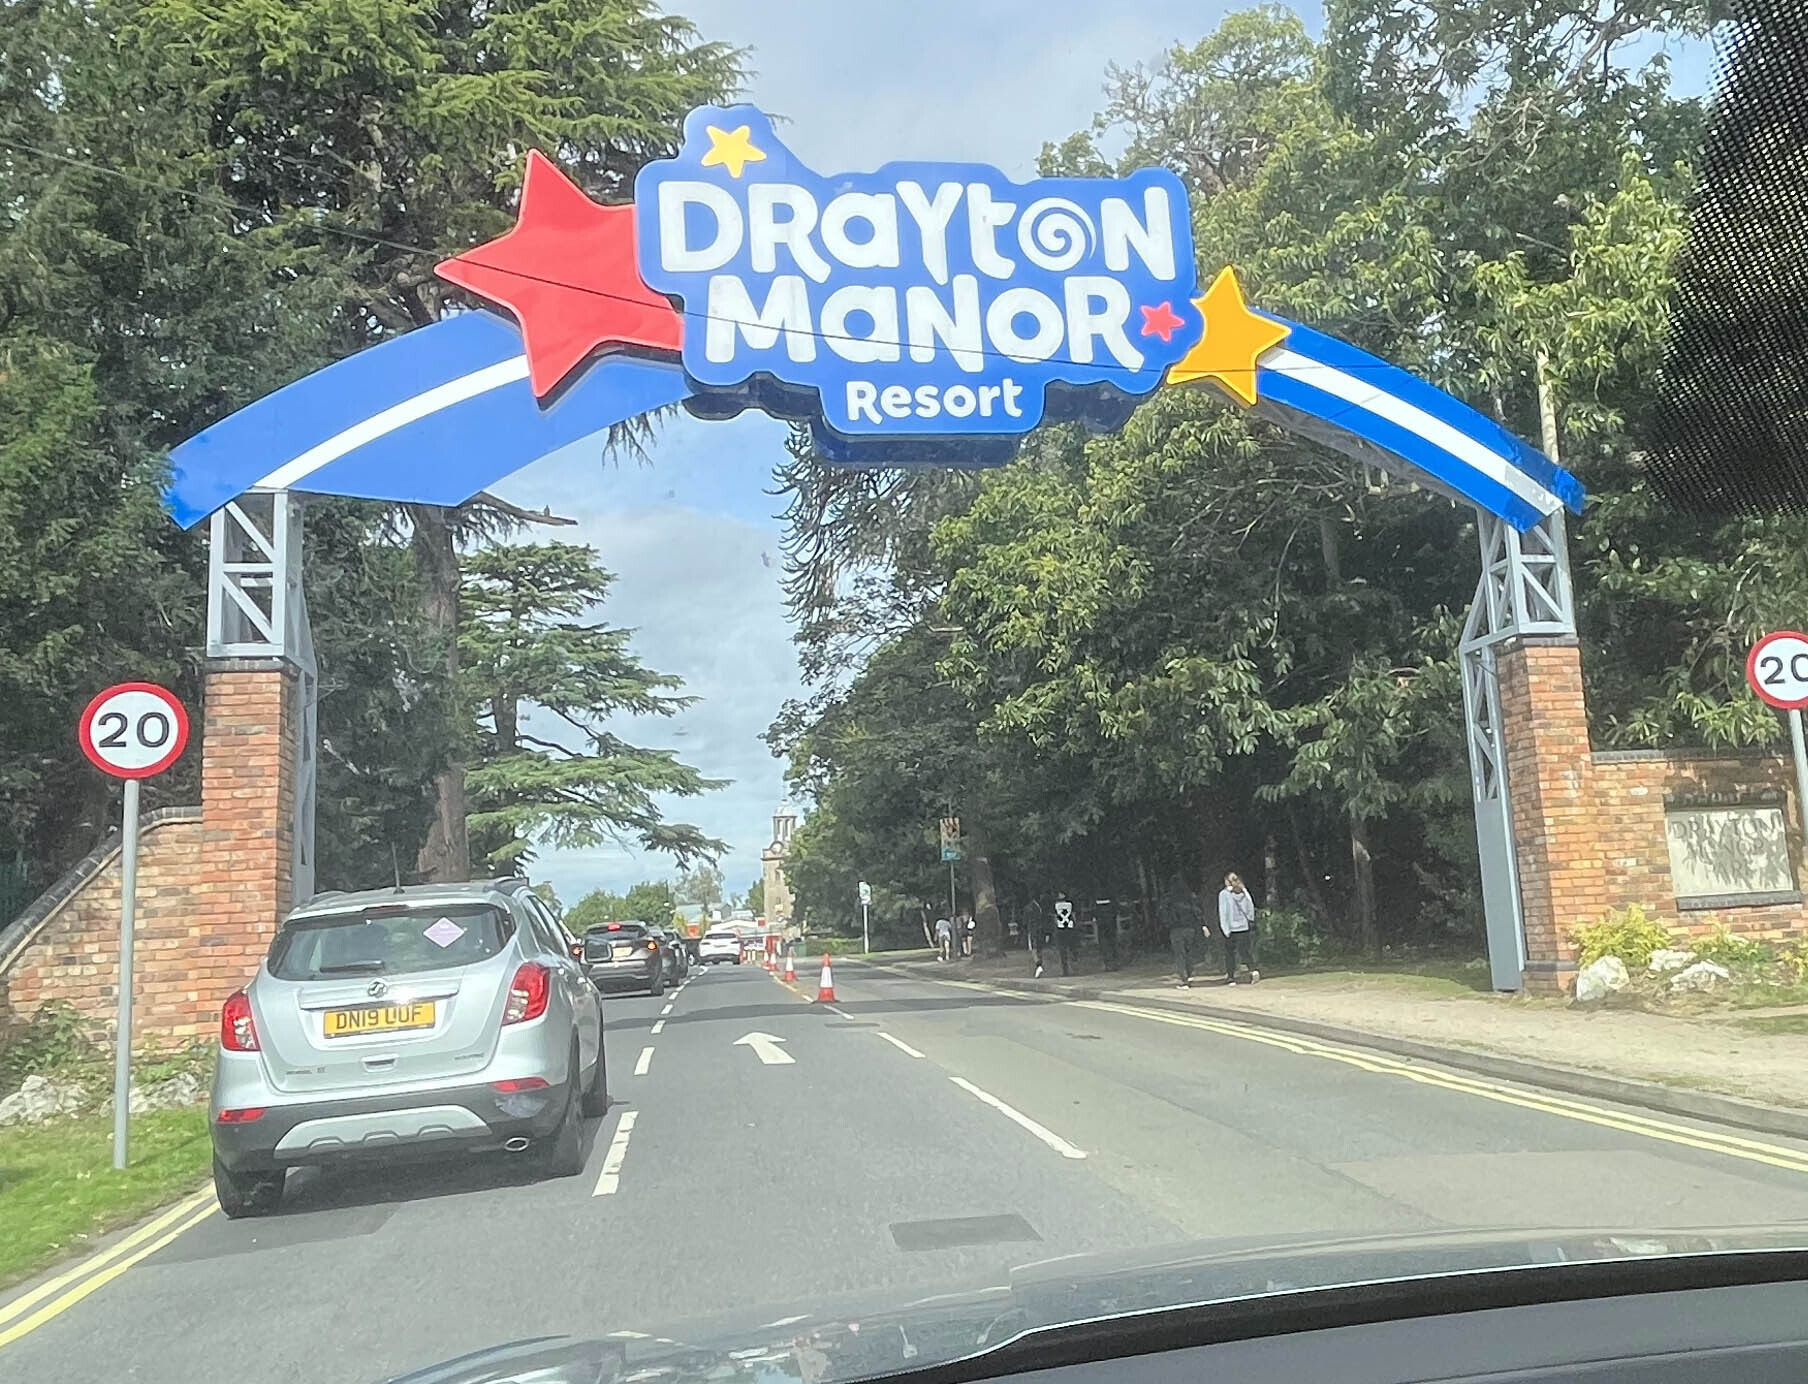 drayton manor sign